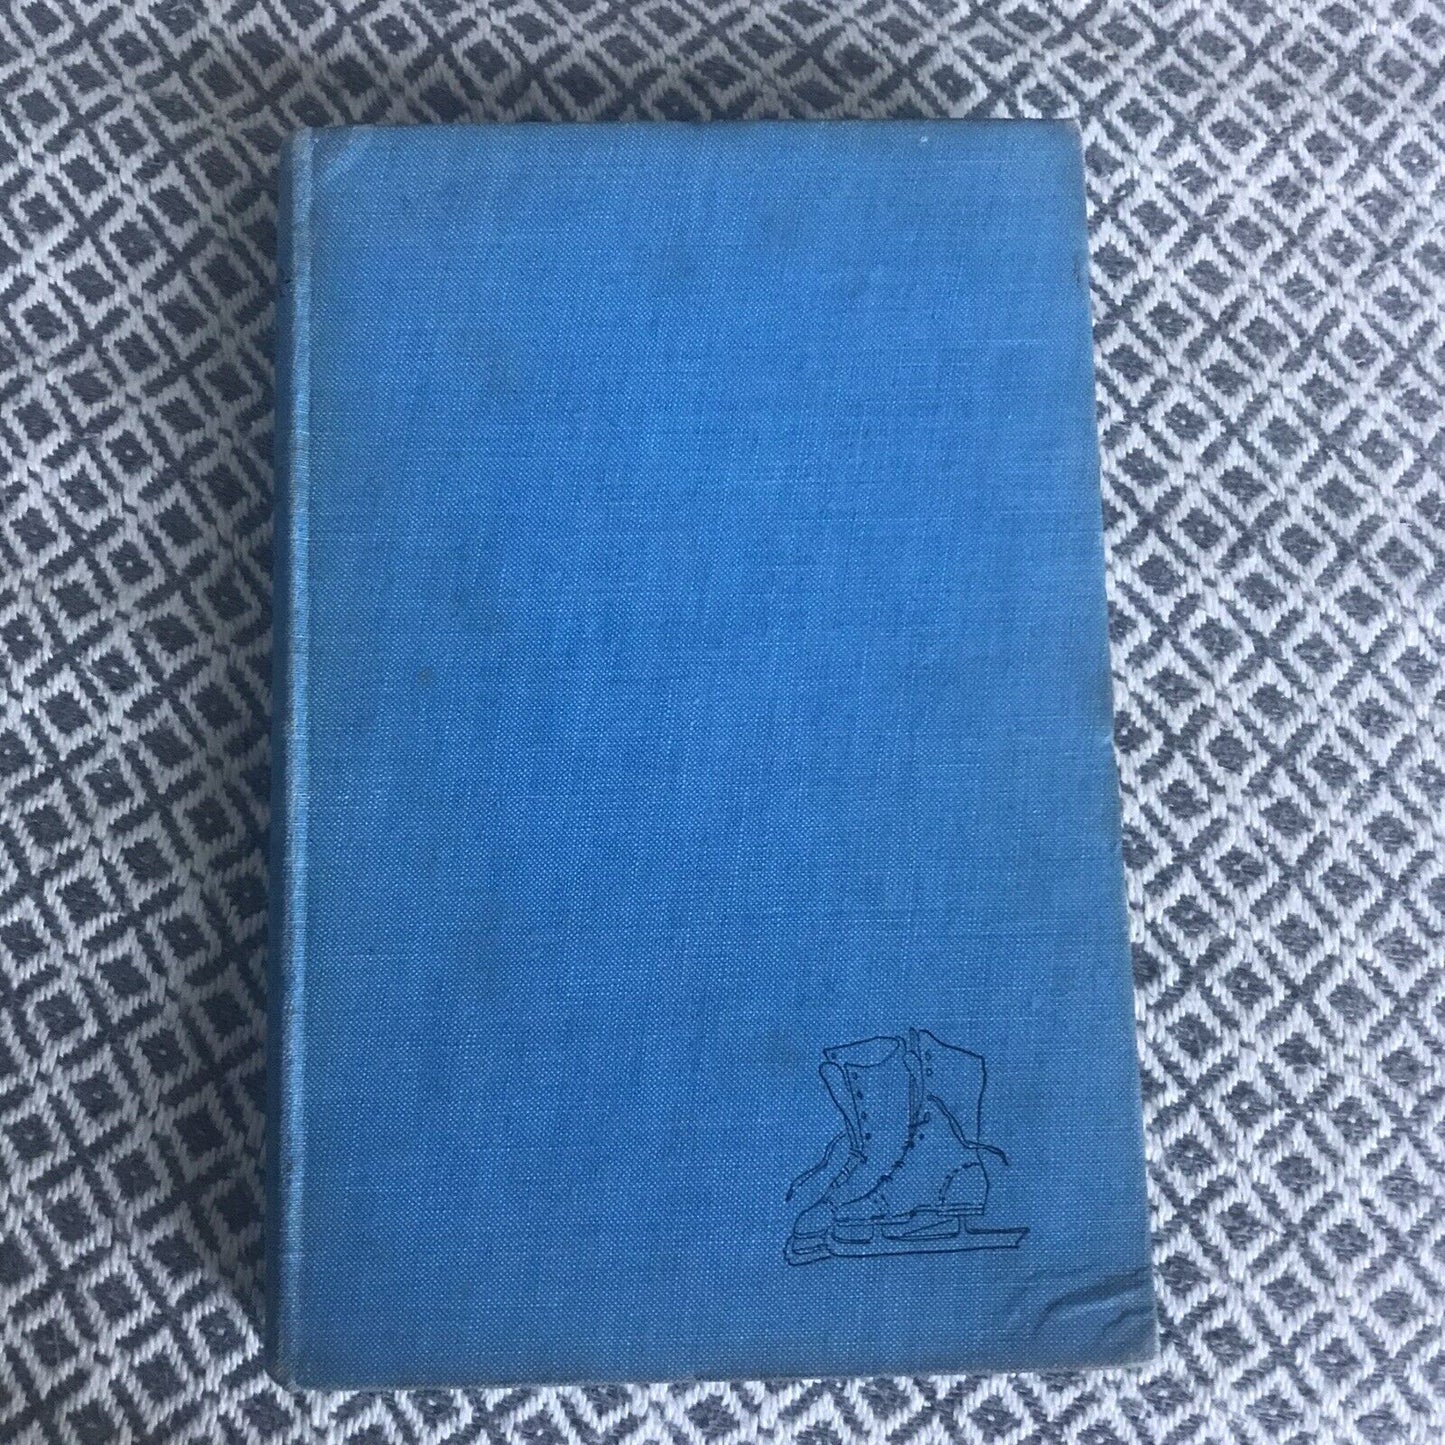 1950*1st* A Boy In Samarkand- George Sava(Margaret Wolfe illust) Faber & Faber Honeyburn Books (UK)